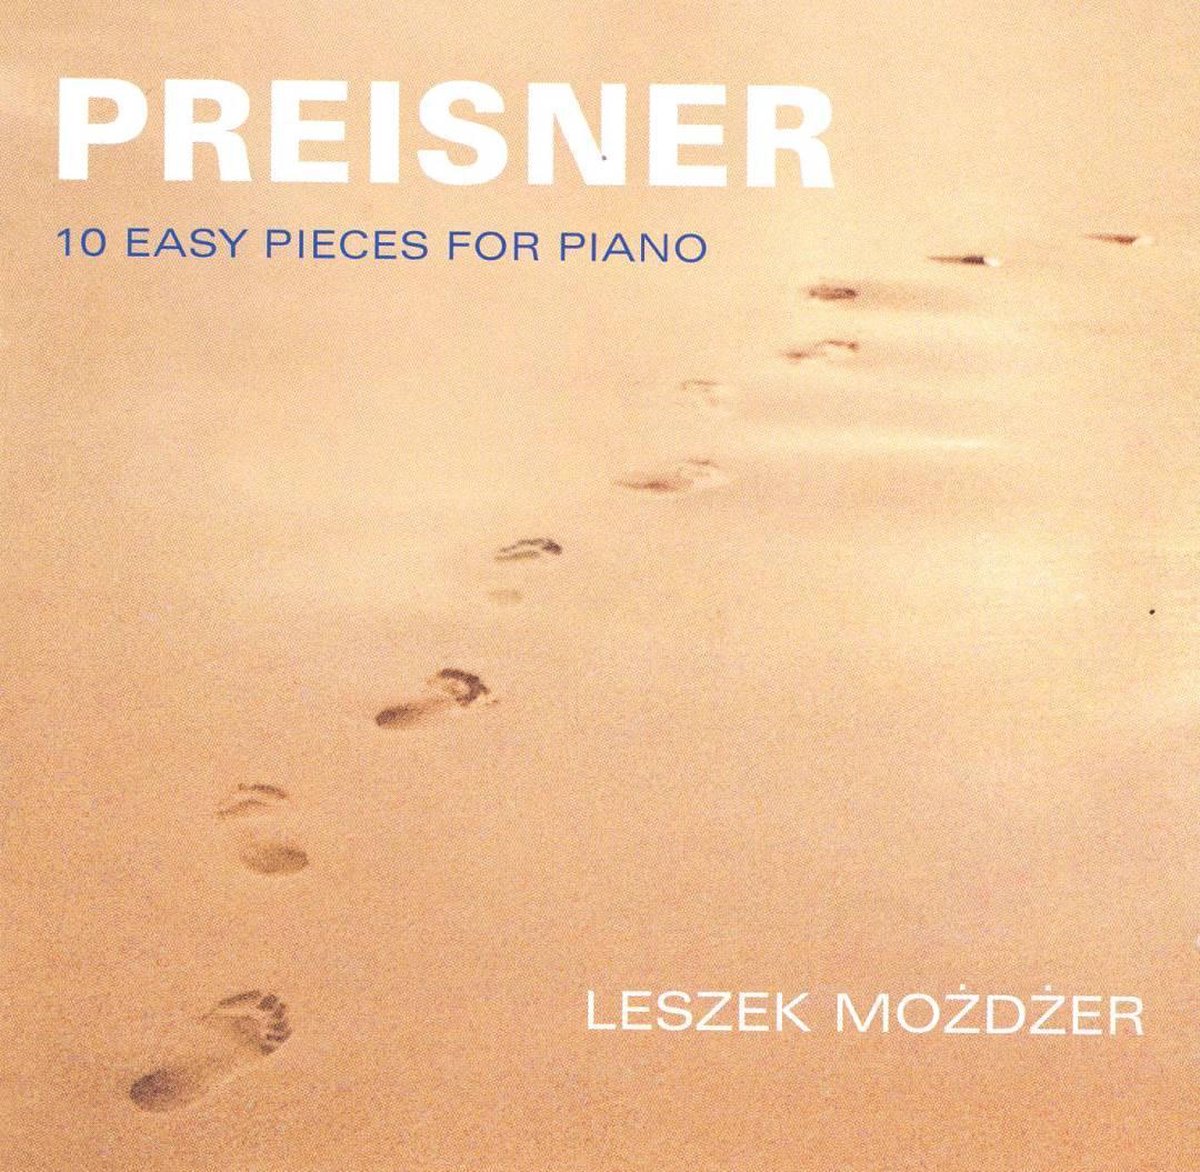 Preisner: 10 Easy Pieces For Piano / Leszek Mozdzer - Leszek Mozdzer